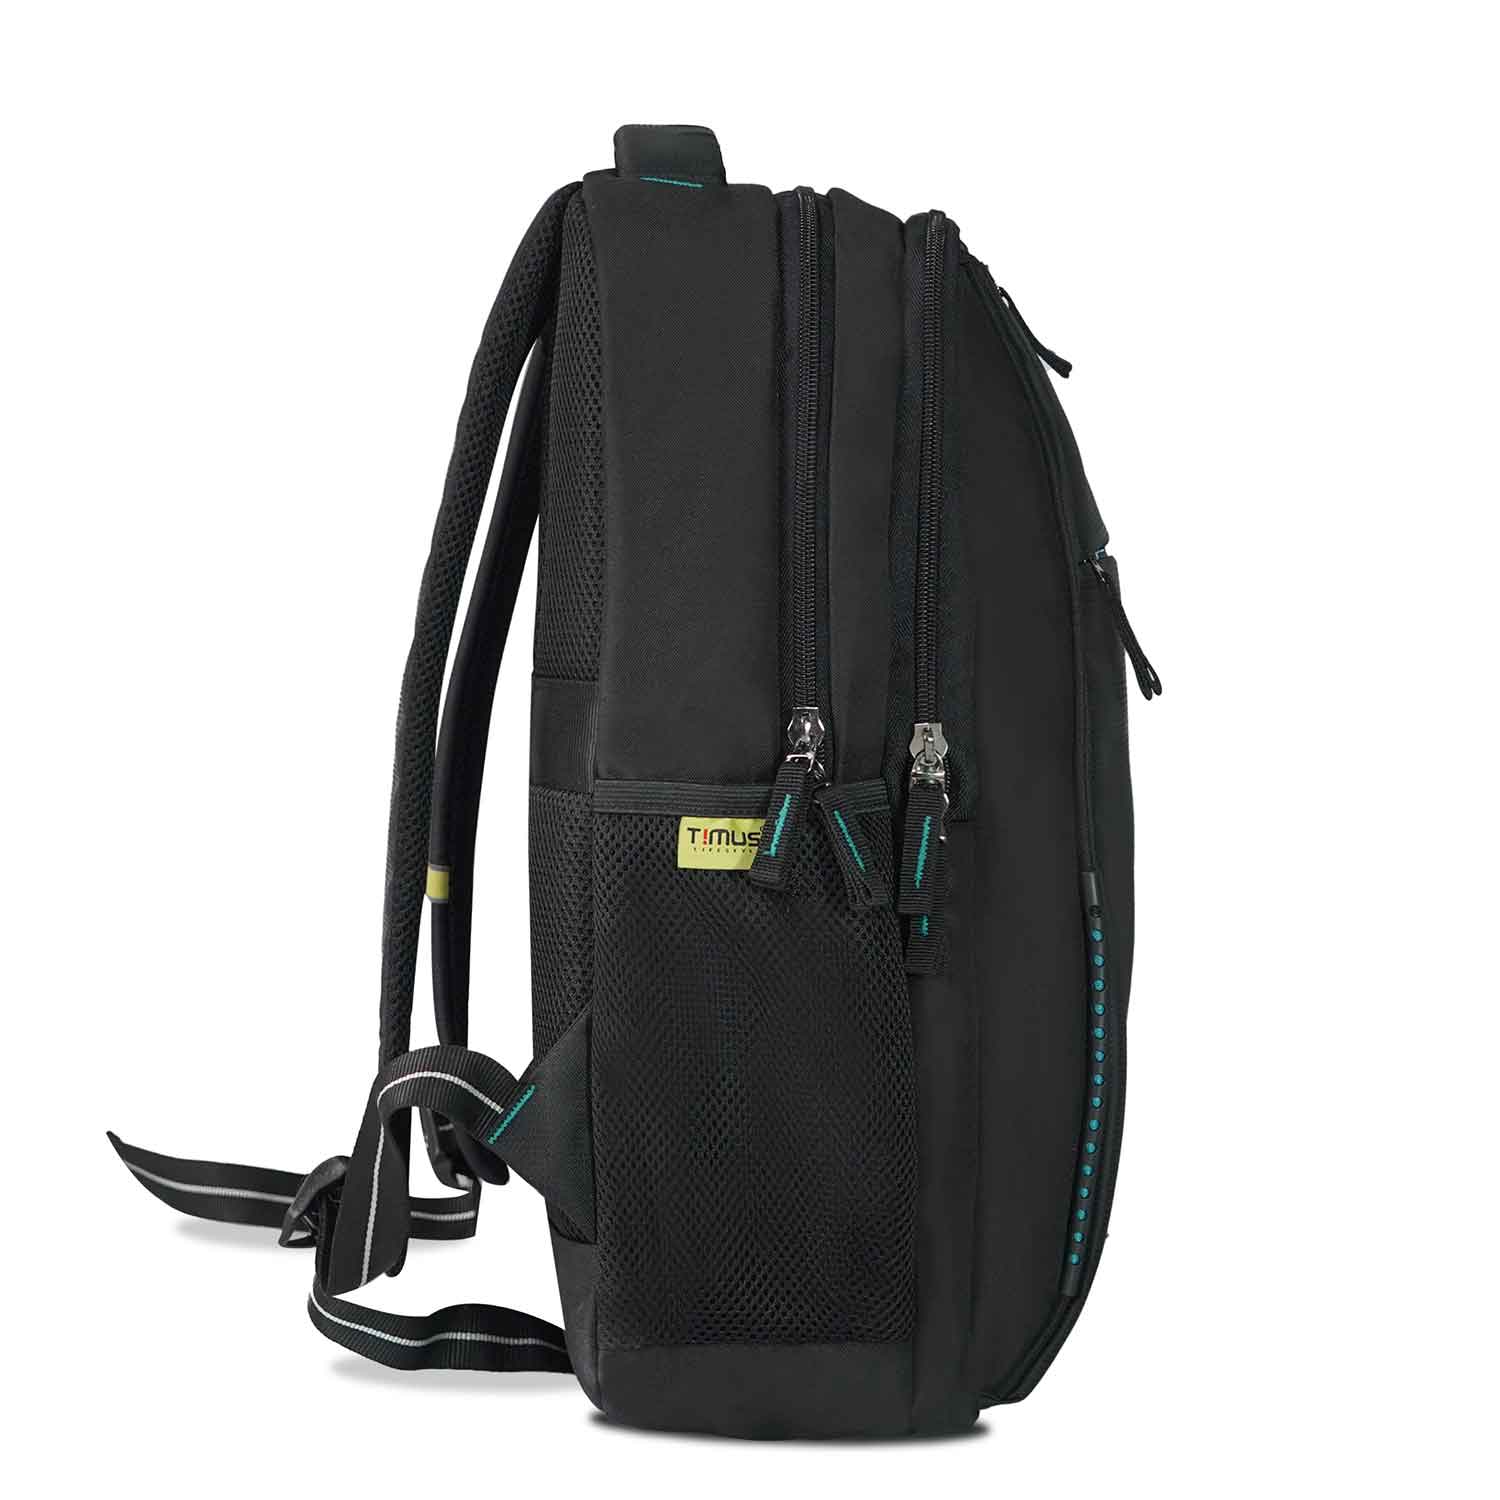 Timus-Lifestyle-backpacks-casual-backpacks-cyprus-black-3